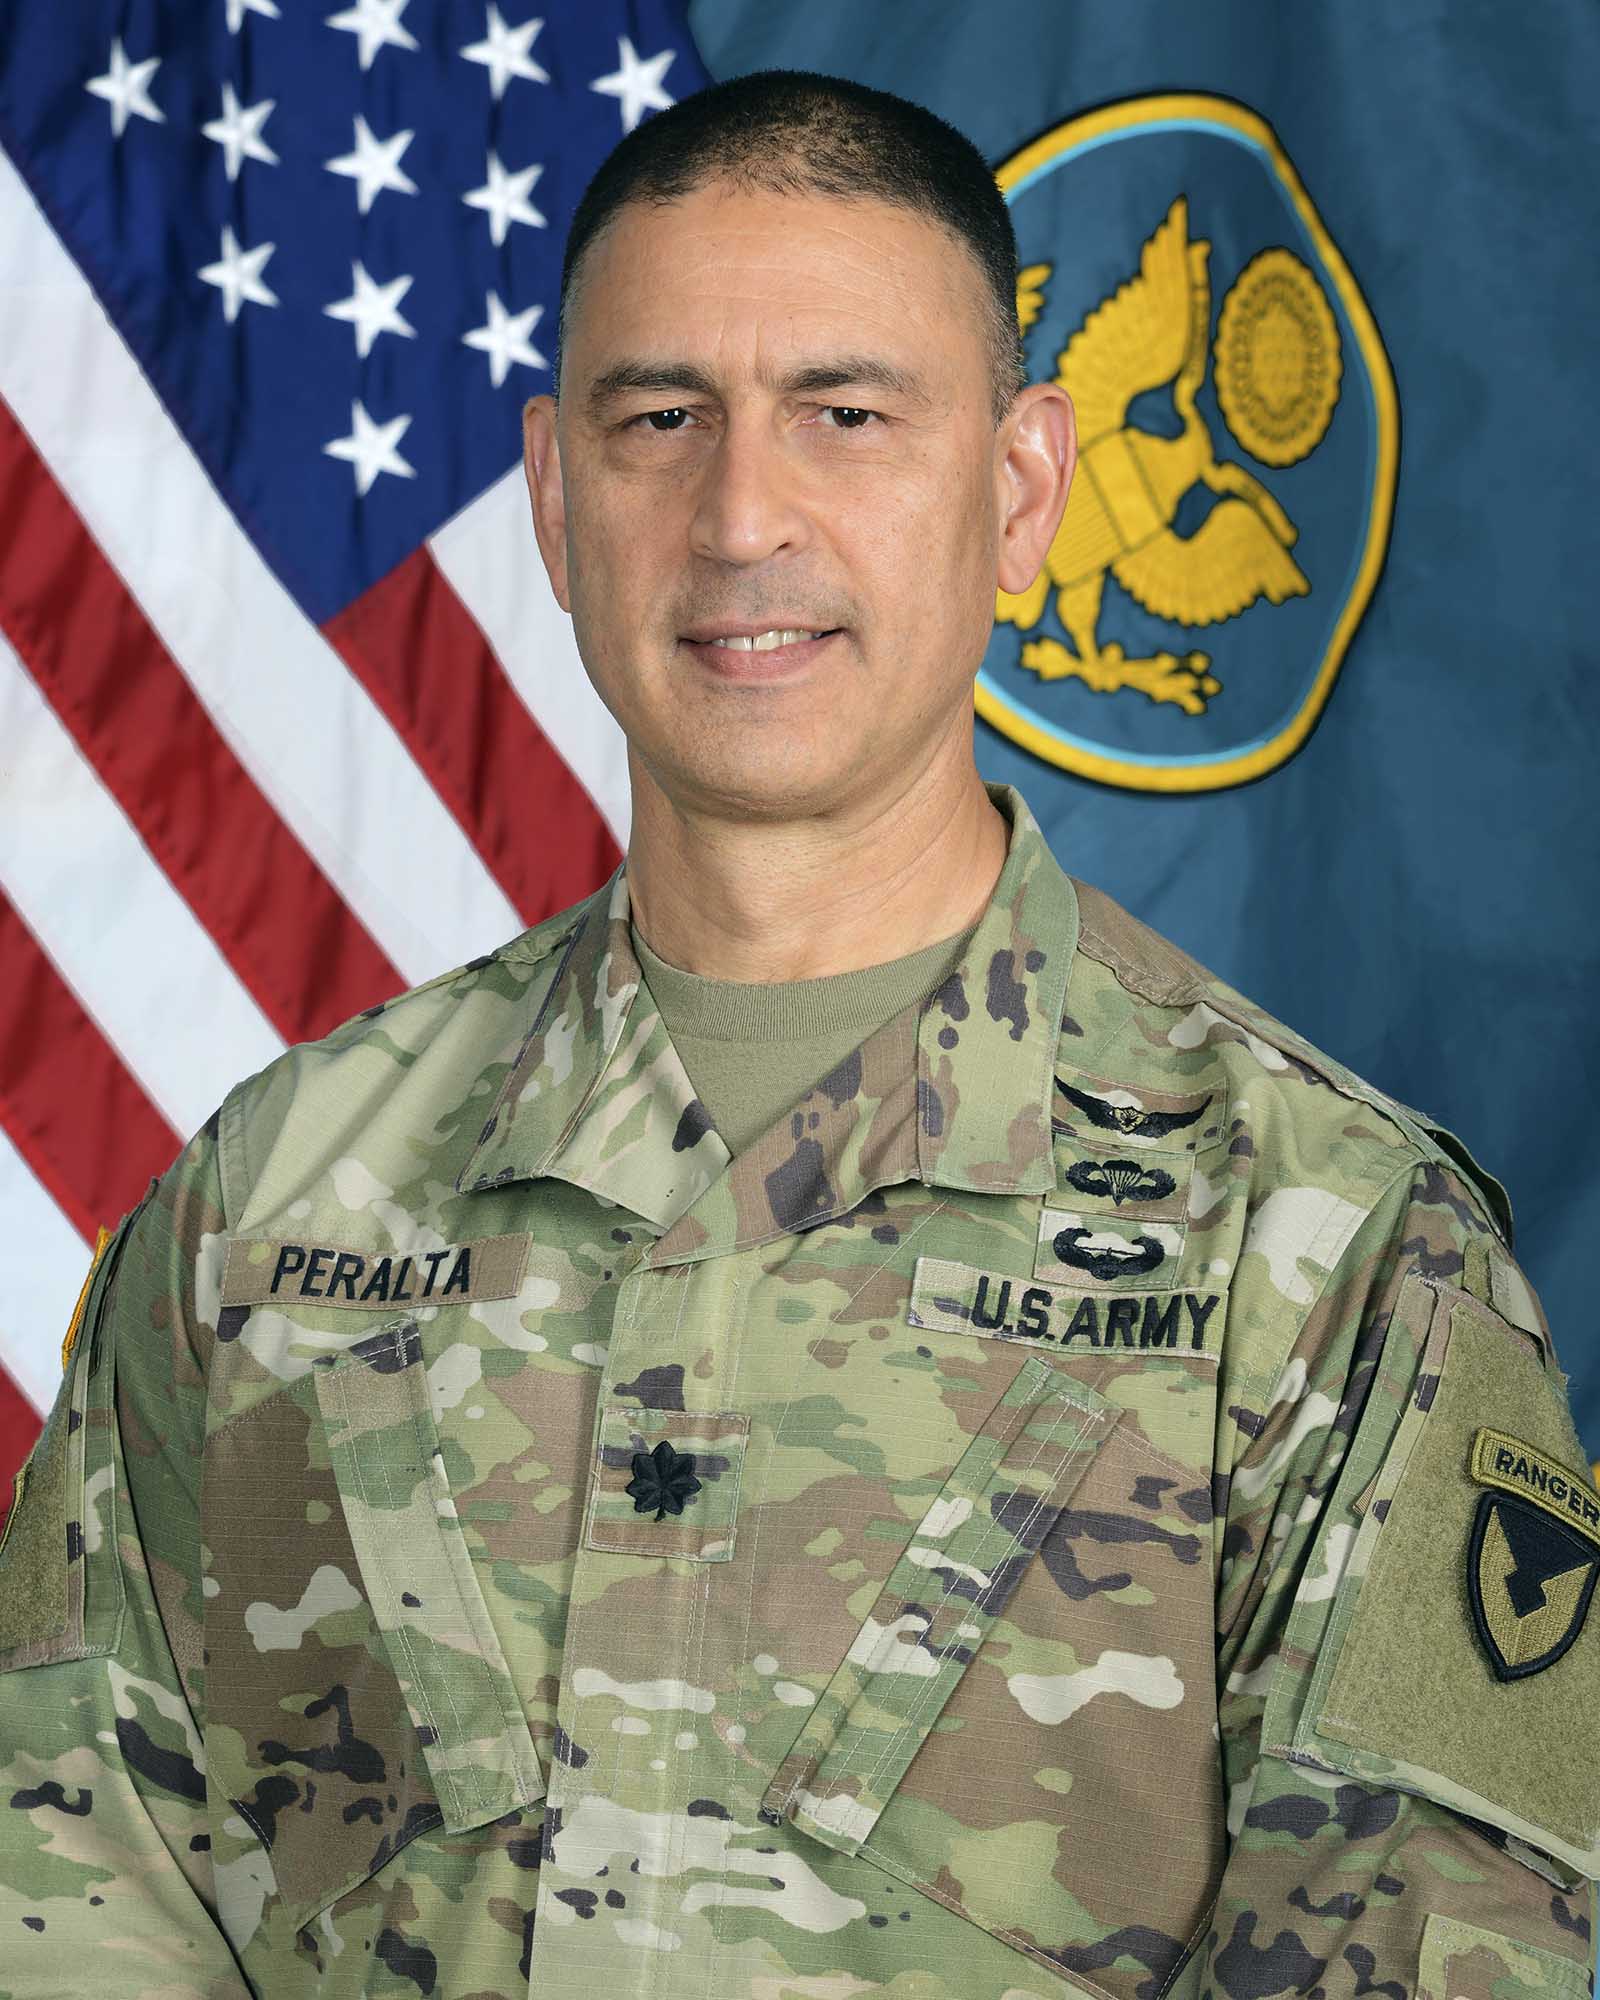 Lt. Col. Geraldo Peralta military headshot